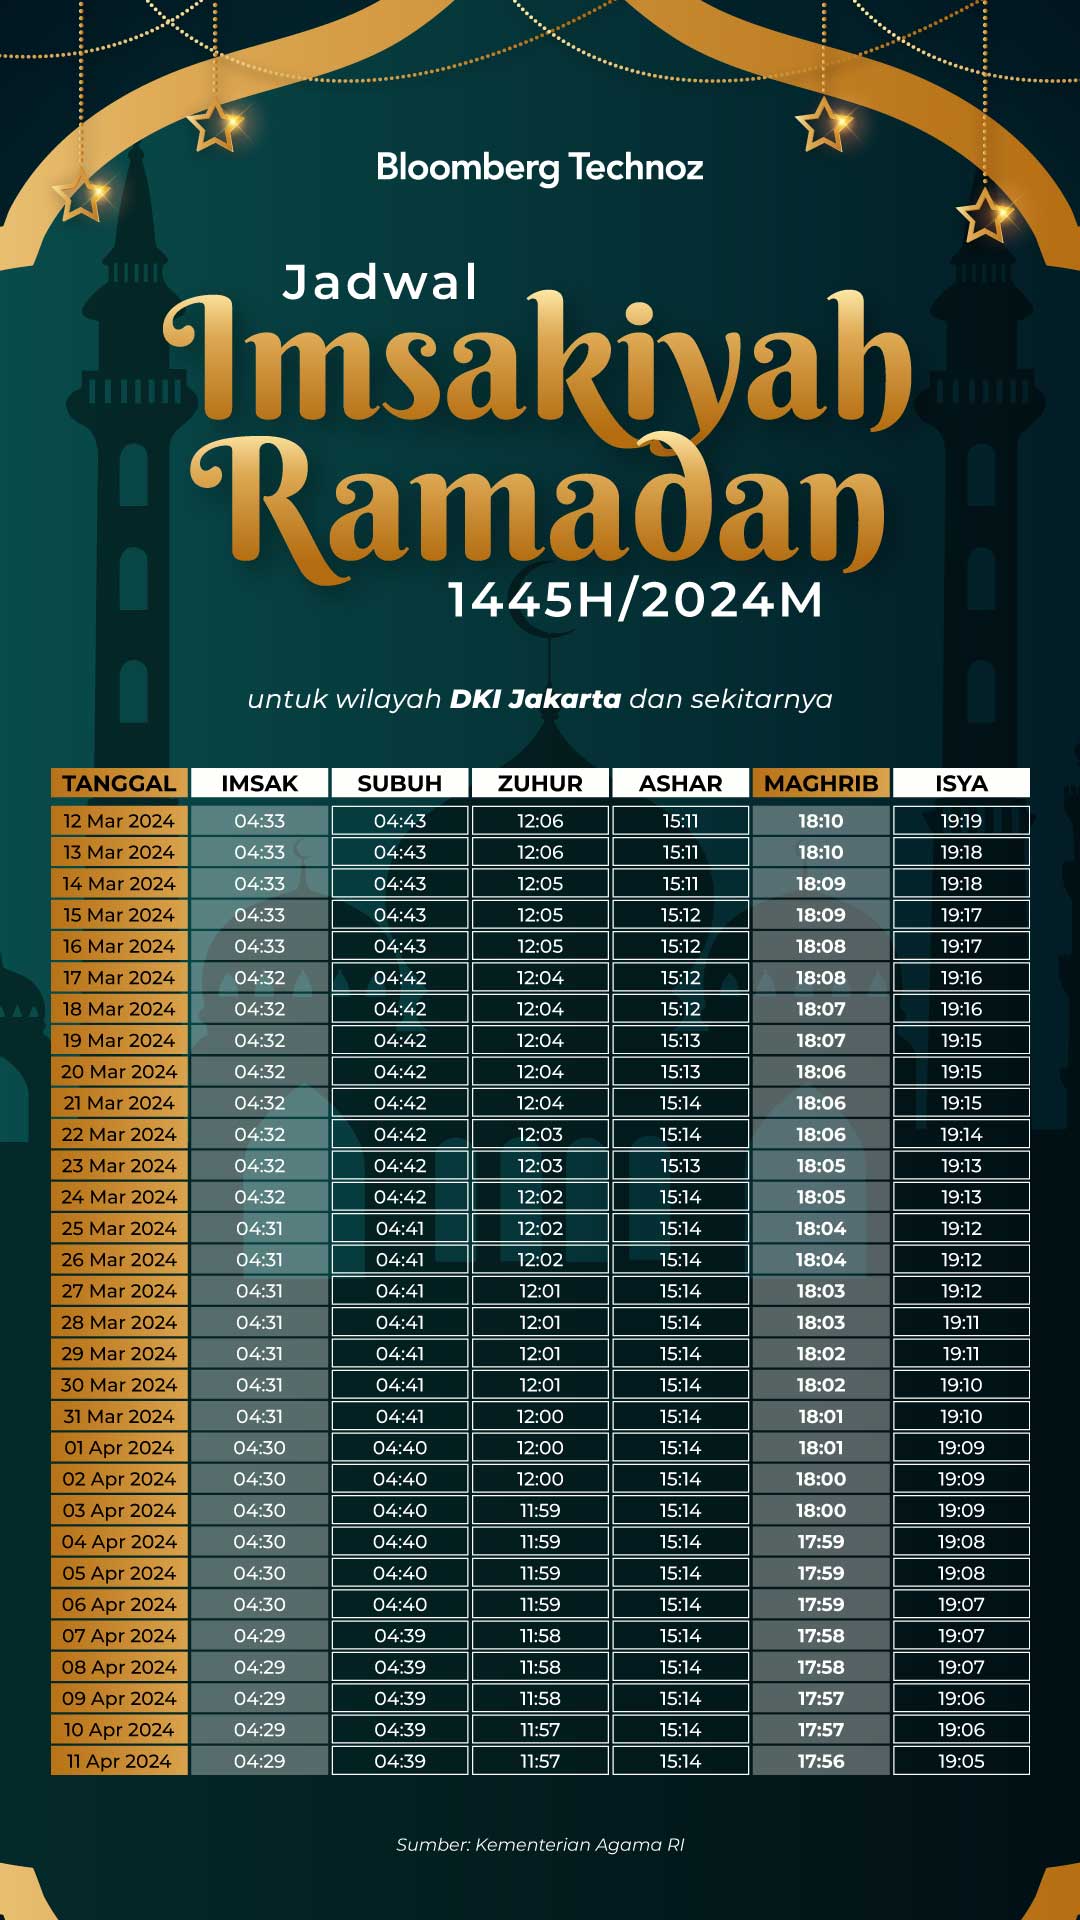 Infografis Jadwal Imsakiyah Ramadan 2024 (Arie Pratama/Bloomberg Technoz)